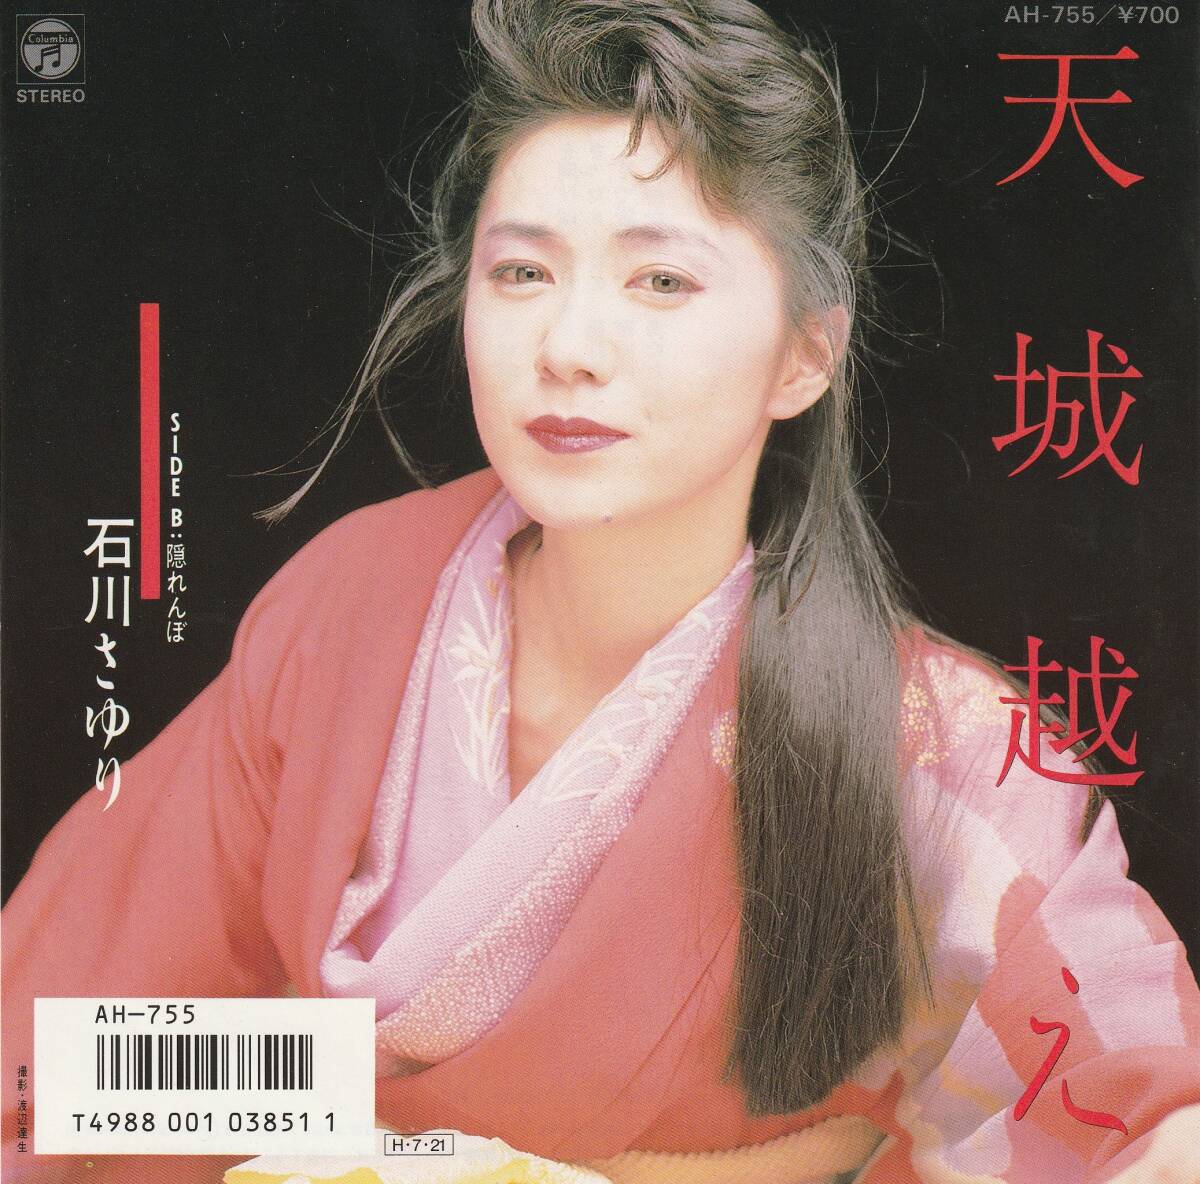  Ishikawa ... heaven castle to cross EP record 1986